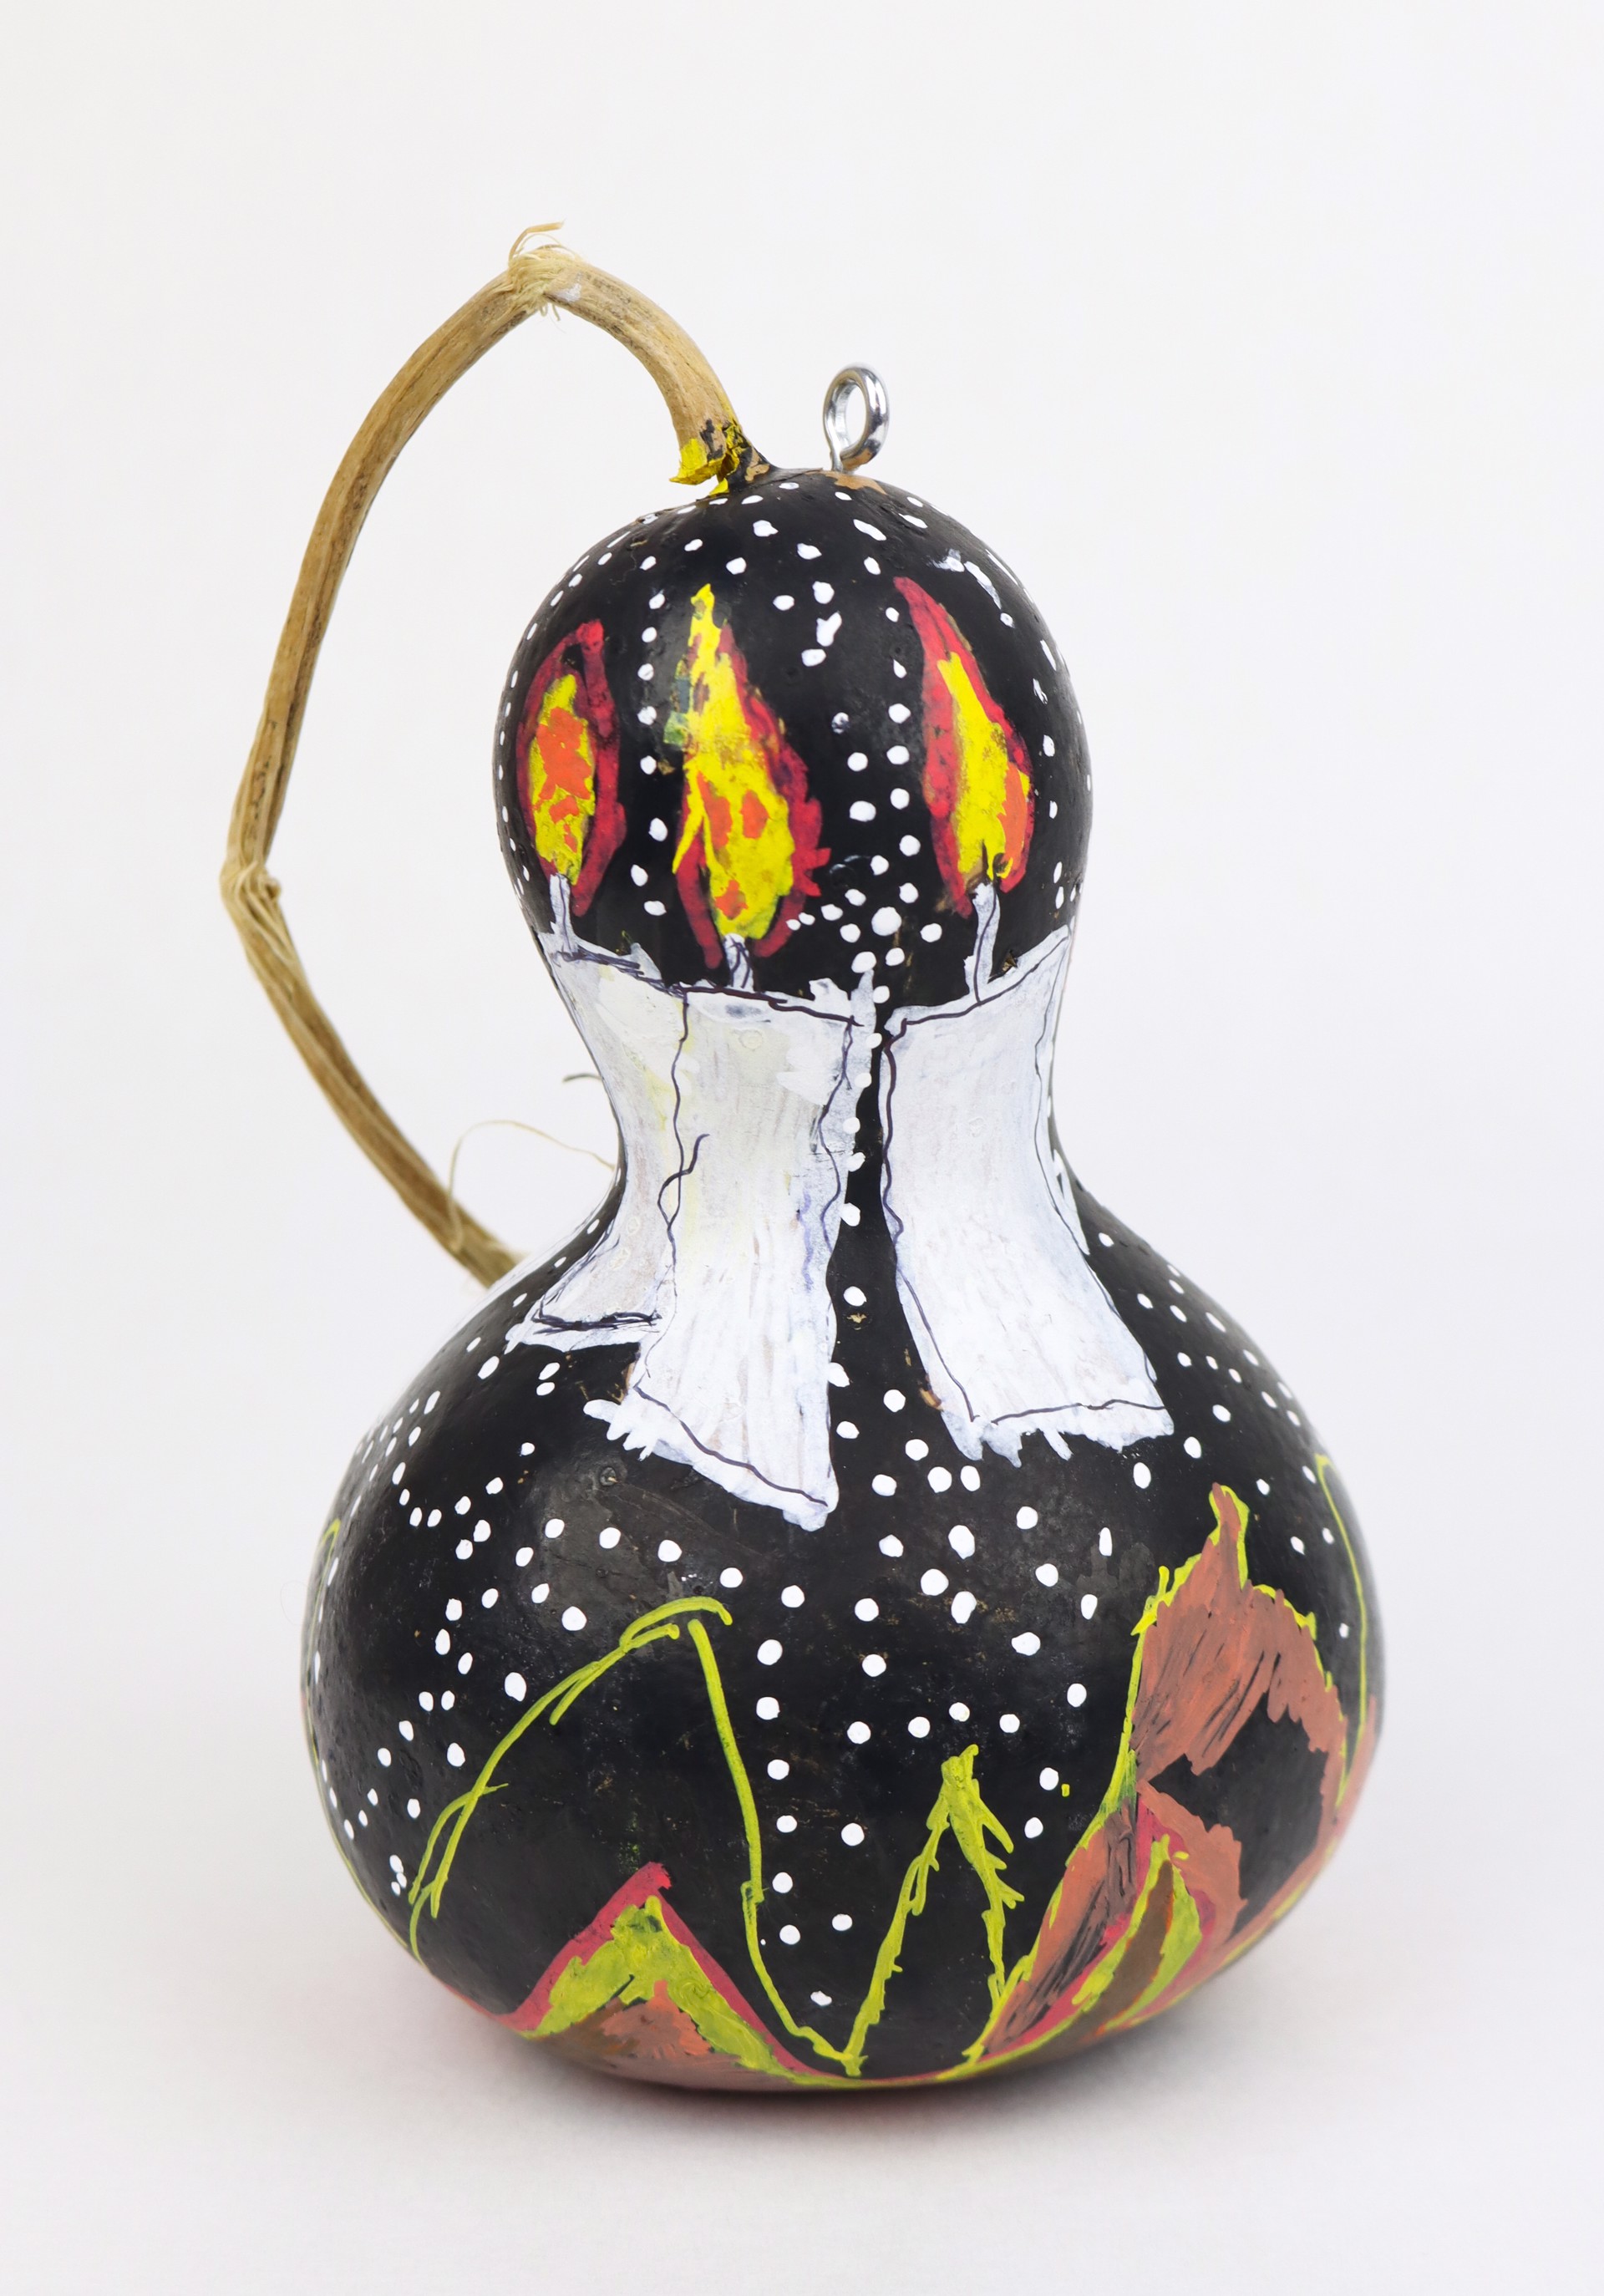 Candles (groud ornament) by Charmaine Jones